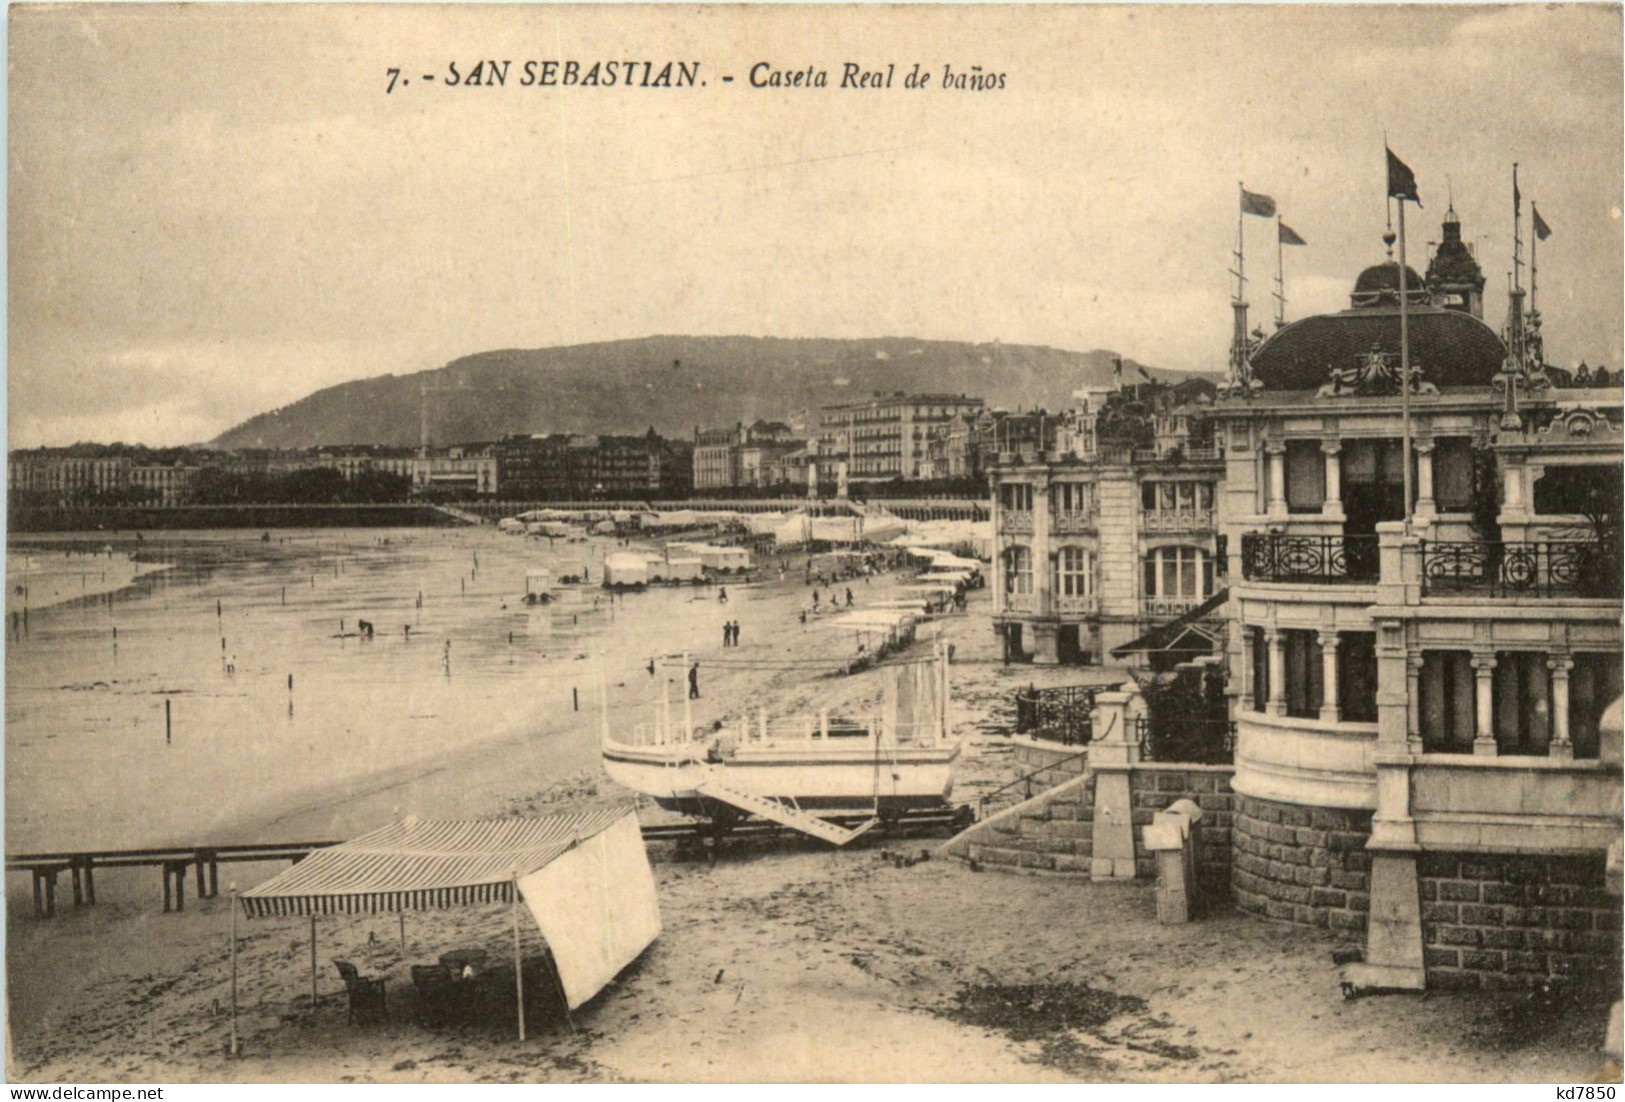 San Sebastian - Caseta Real - Guipúzcoa (San Sebastián)